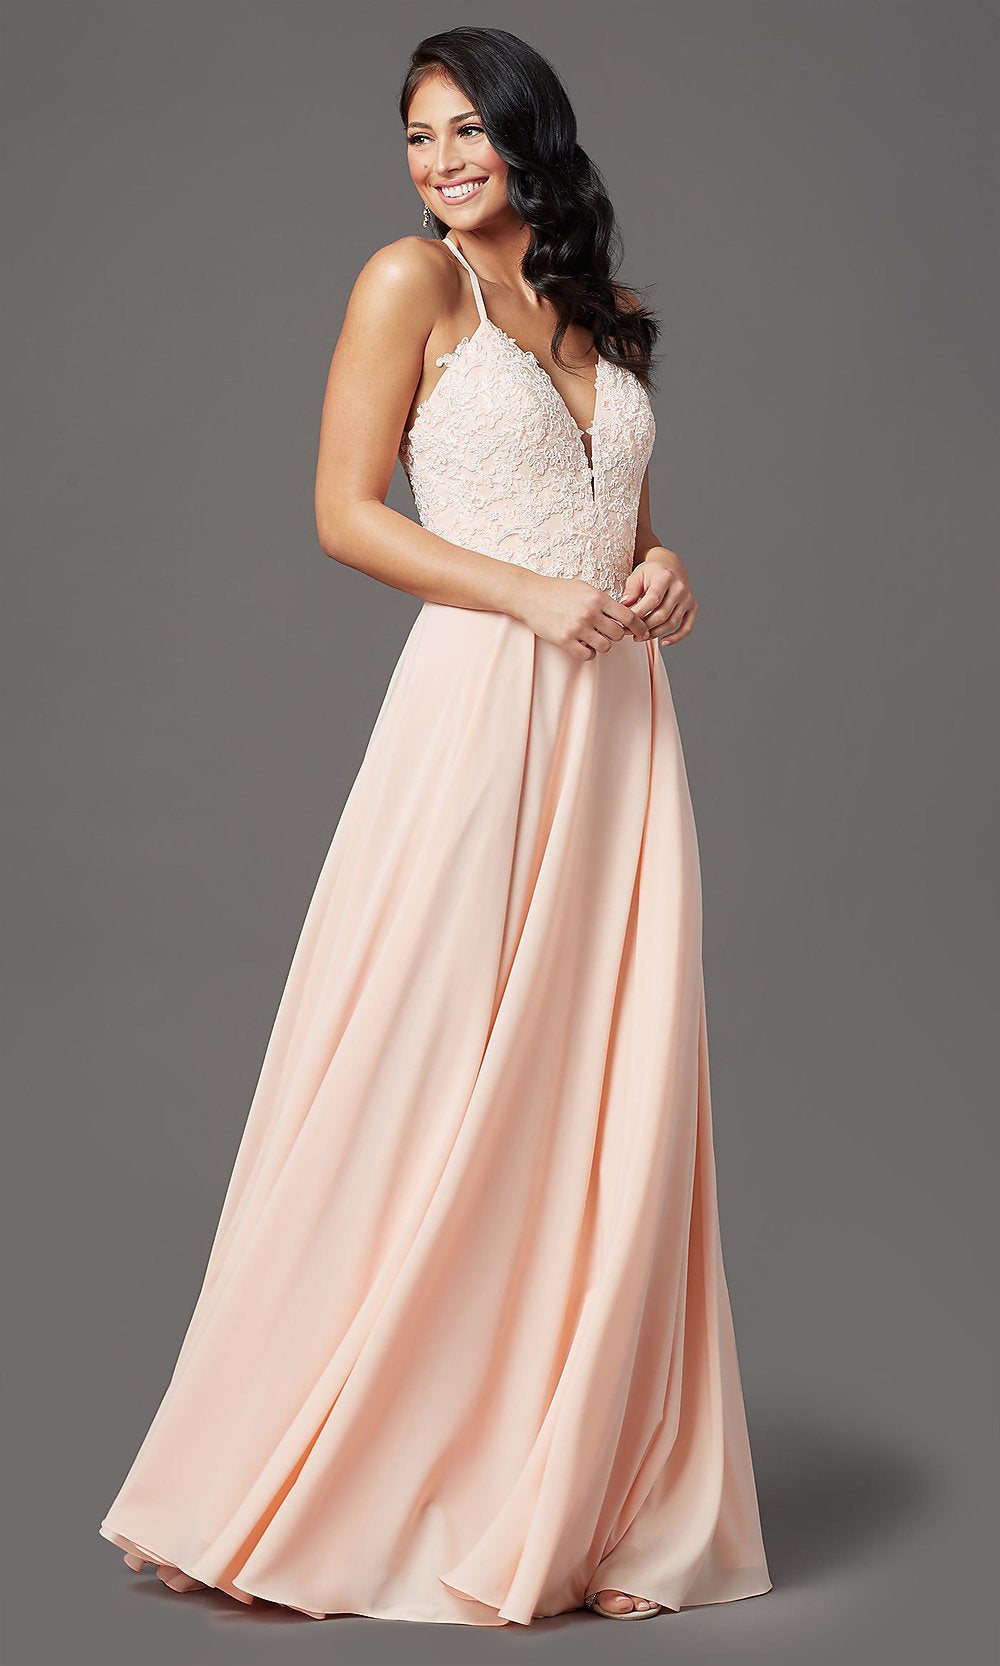  Open-Back Long Prom Dress by PromGirl